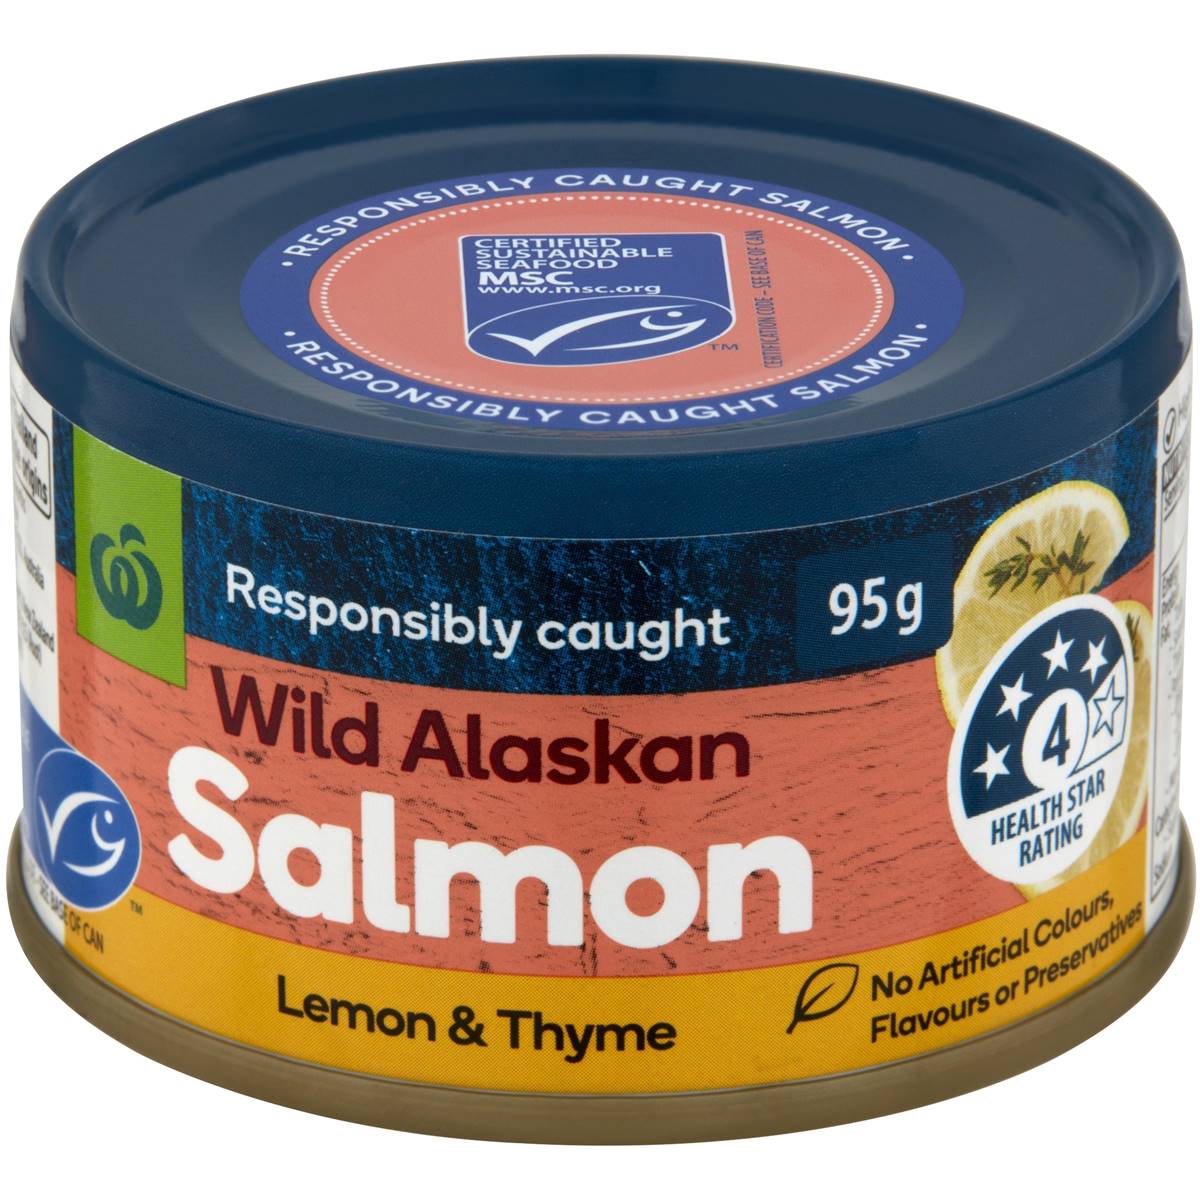 Calories in Woolworths Salmon Lemon & Thyme